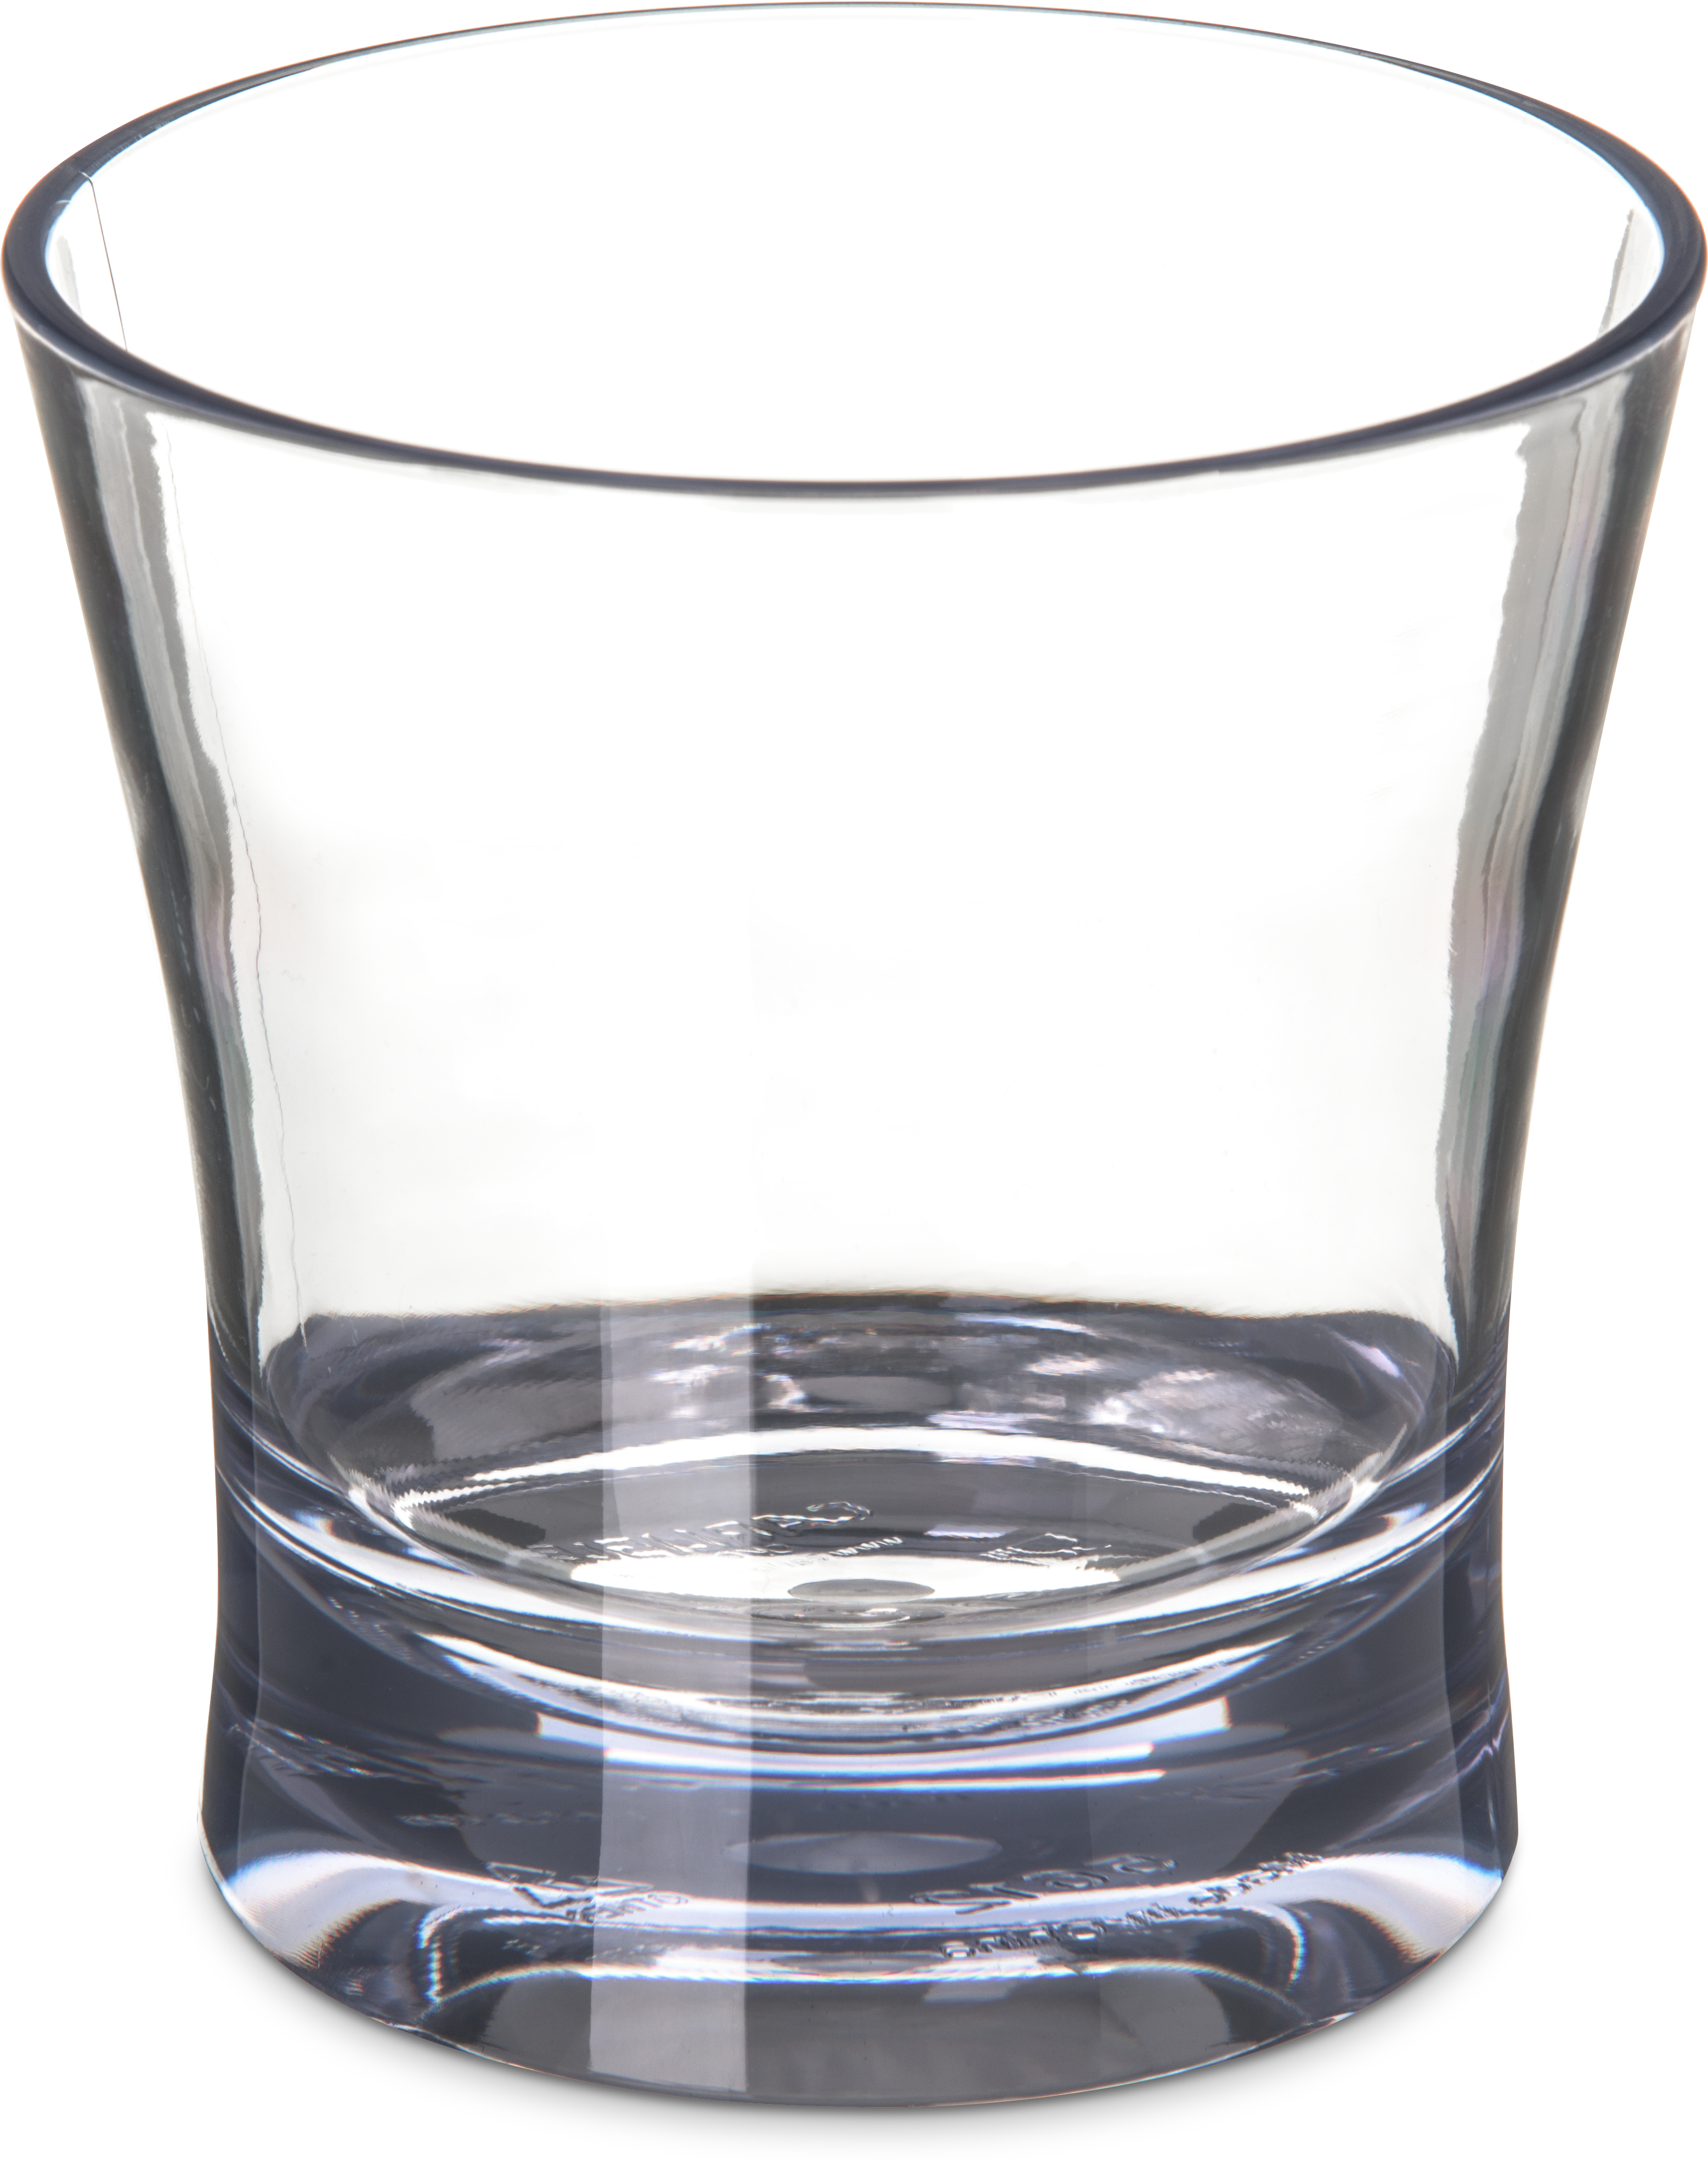 Alibi Plastic Double Old Fashioned Glass 12 oz (4ea) - Clear